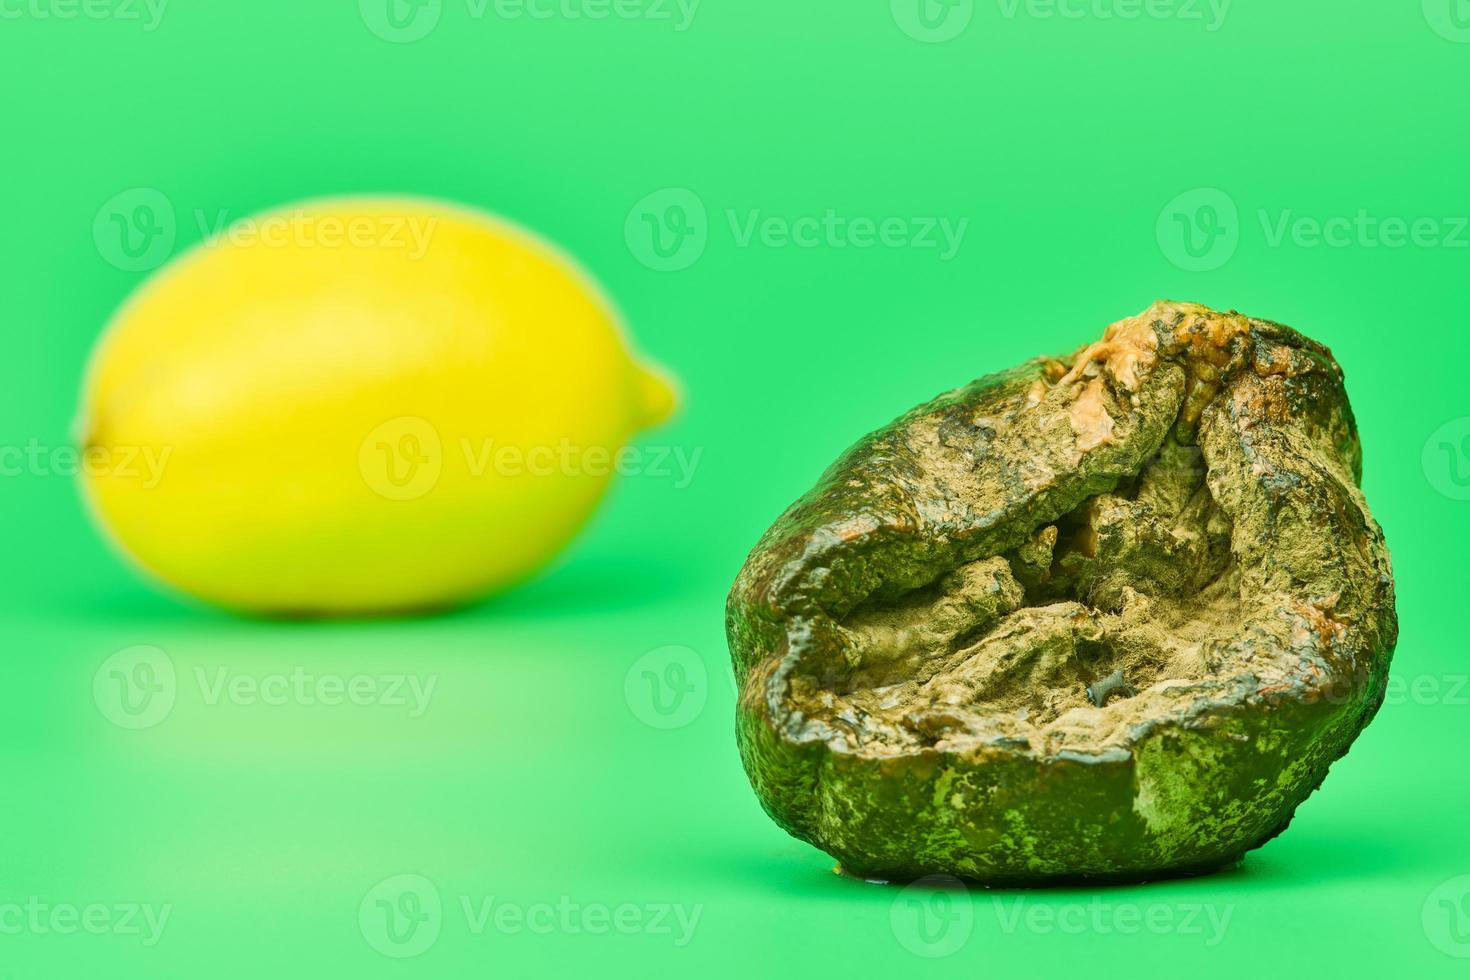 Rotten lemon and fresh lemon compare, green background photo